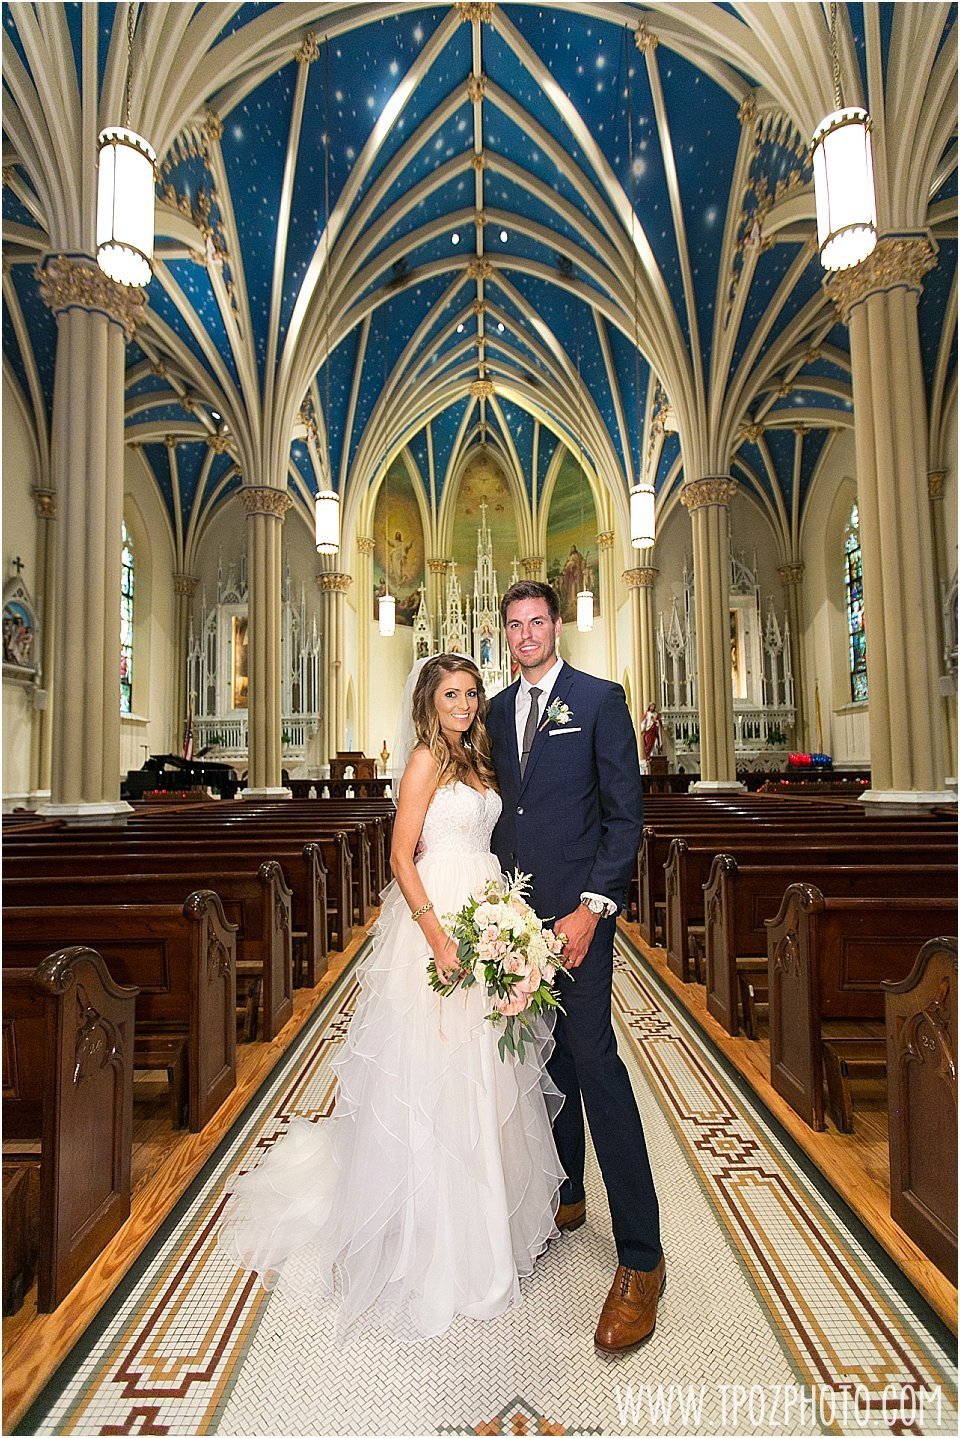 St. Mary's Church Annapolis Wedding Ceremony || tPoz Photography